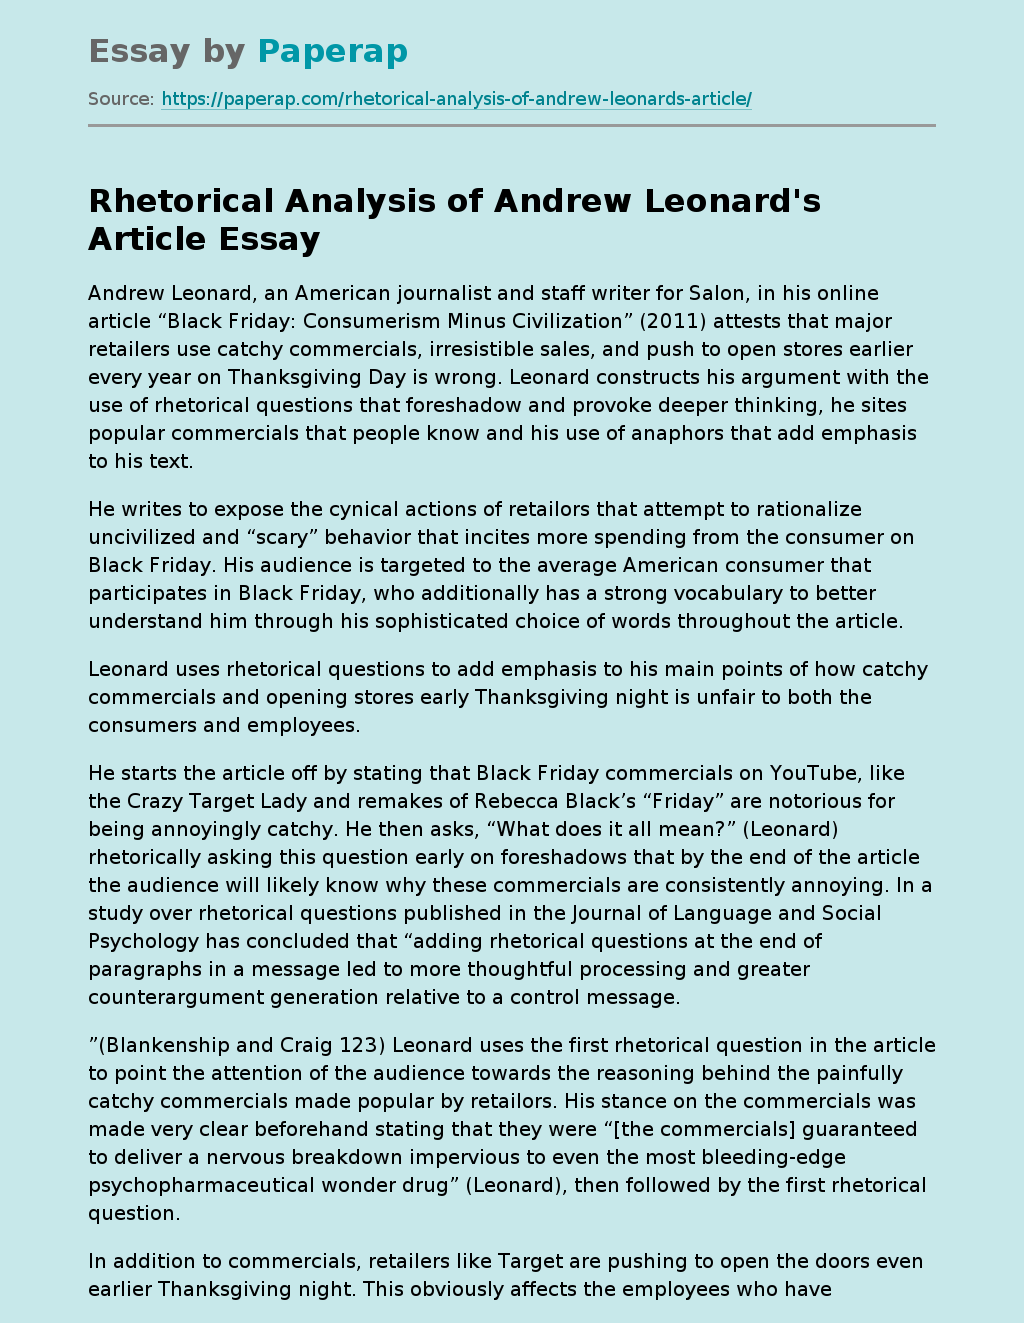 Rhetorical Analysis of Andrew Leonard's Article